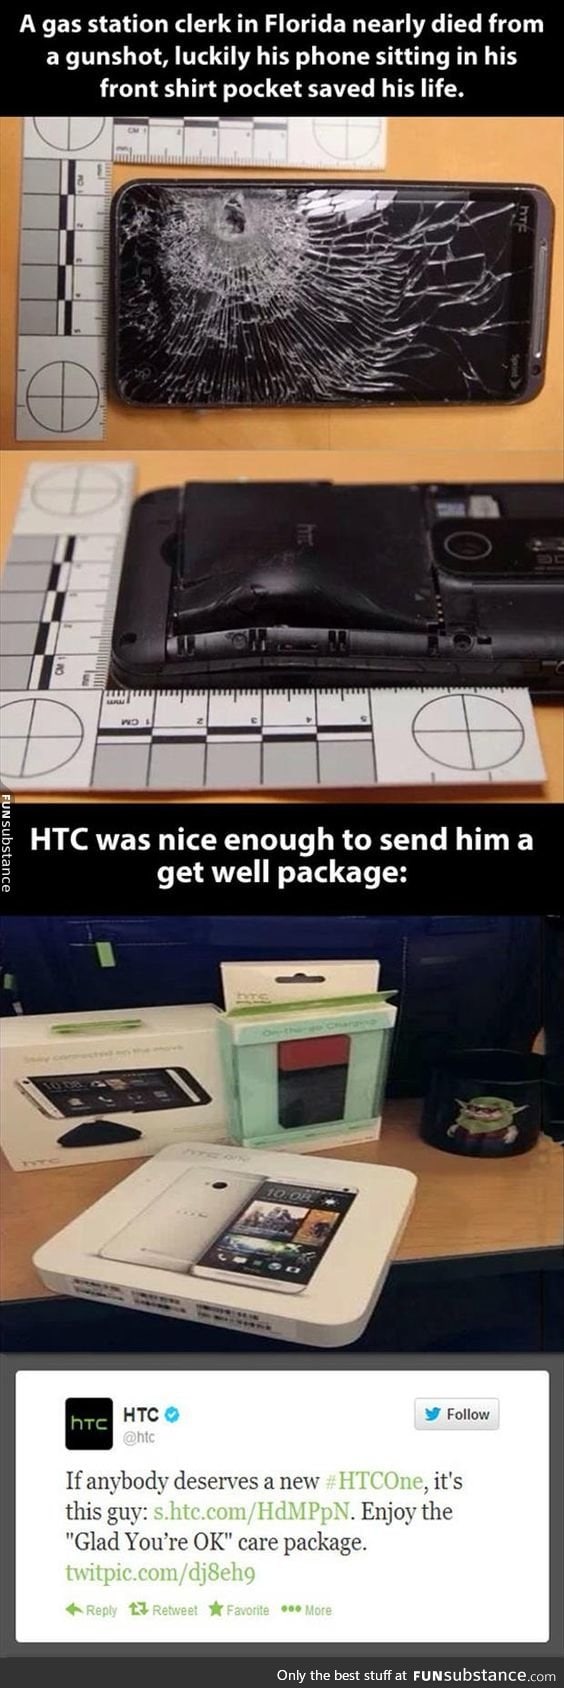 HTC saves lives